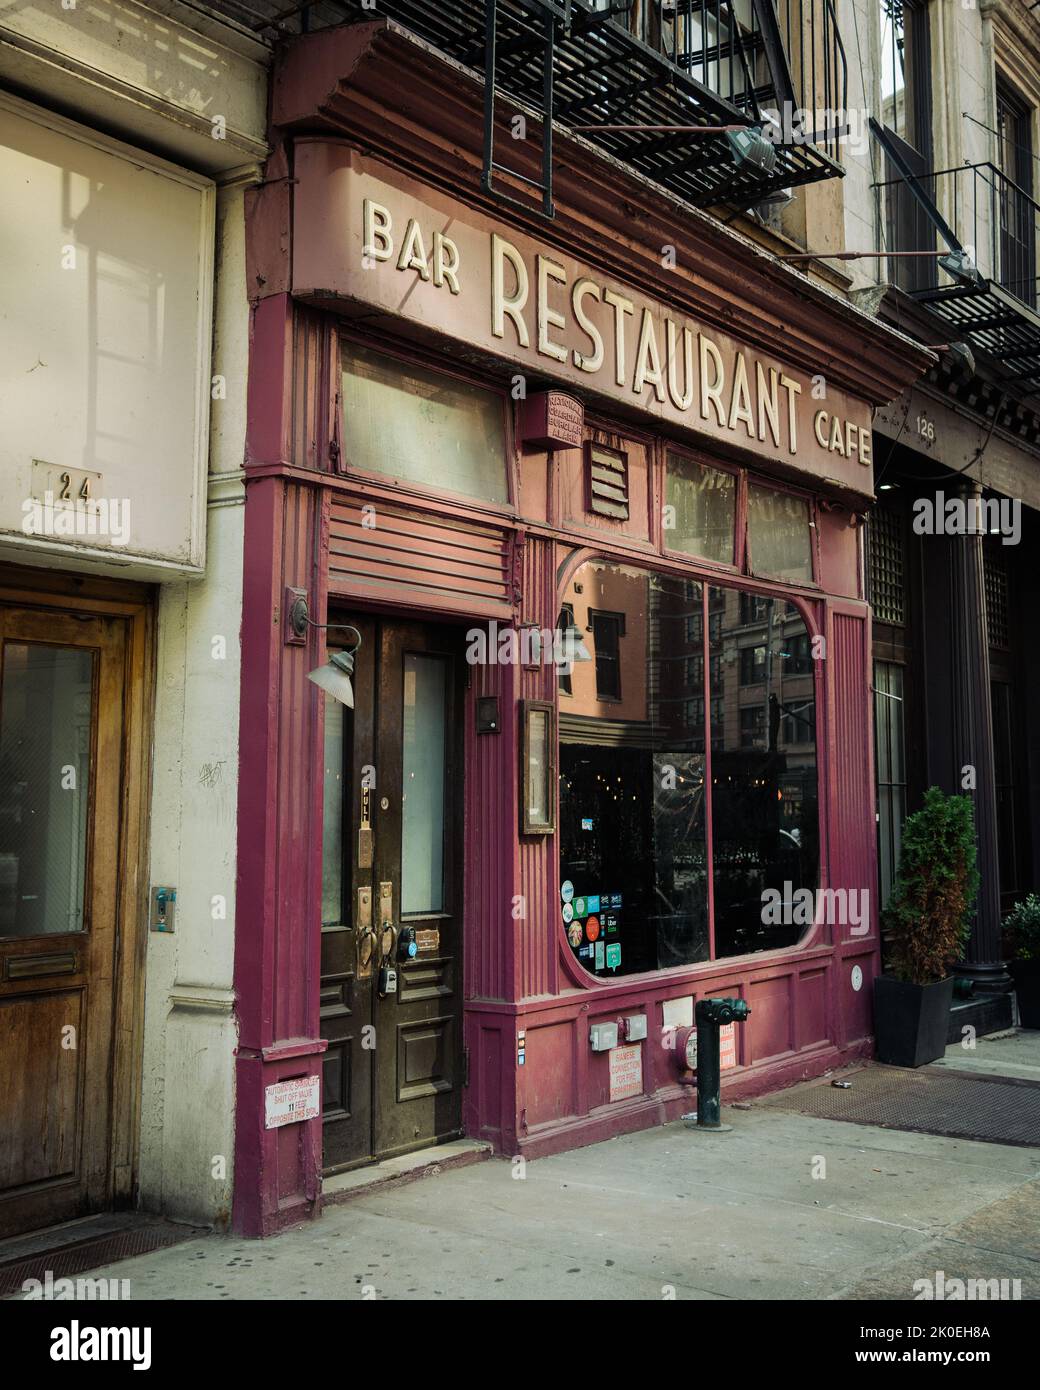 Bar, Restaurant, Cafe vintage sign in Tribeca, Manhattan, New York Stock Photo